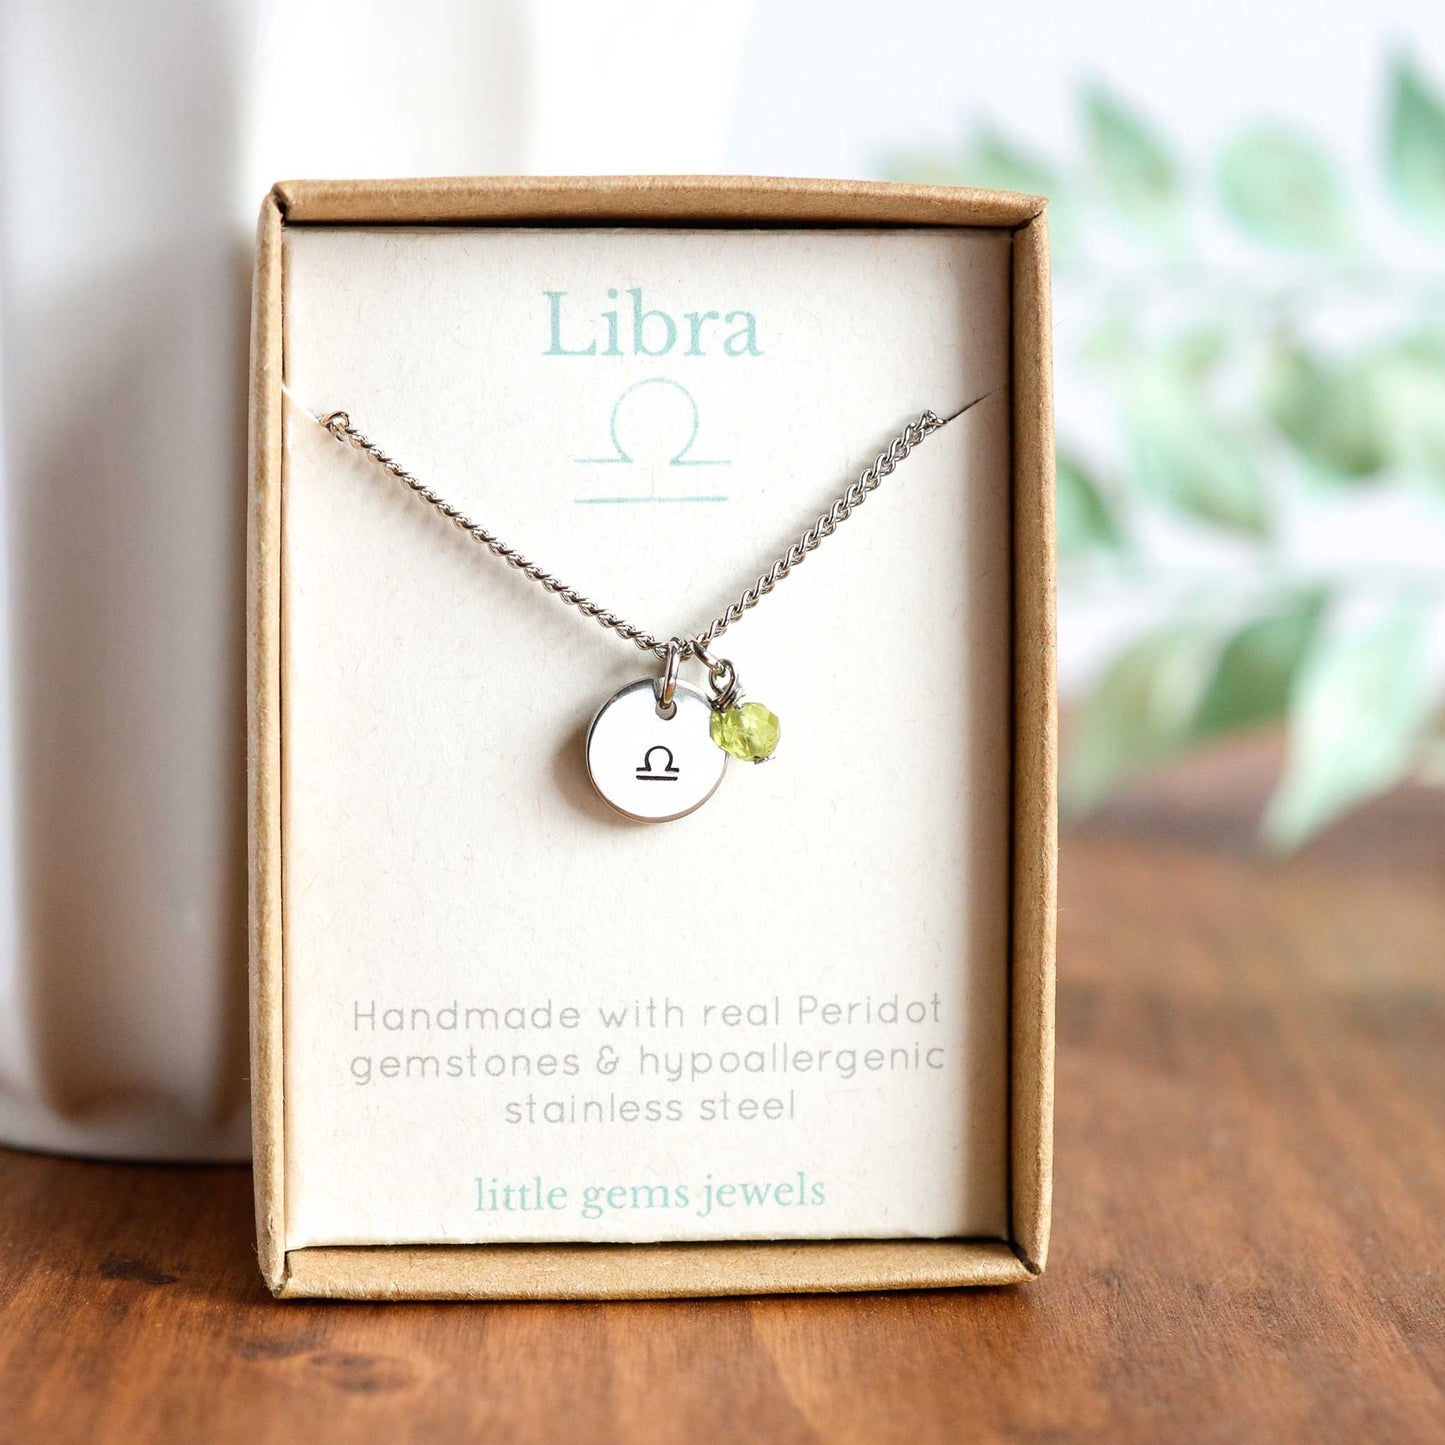 Libra zodiac necklace in eco friendly gift box